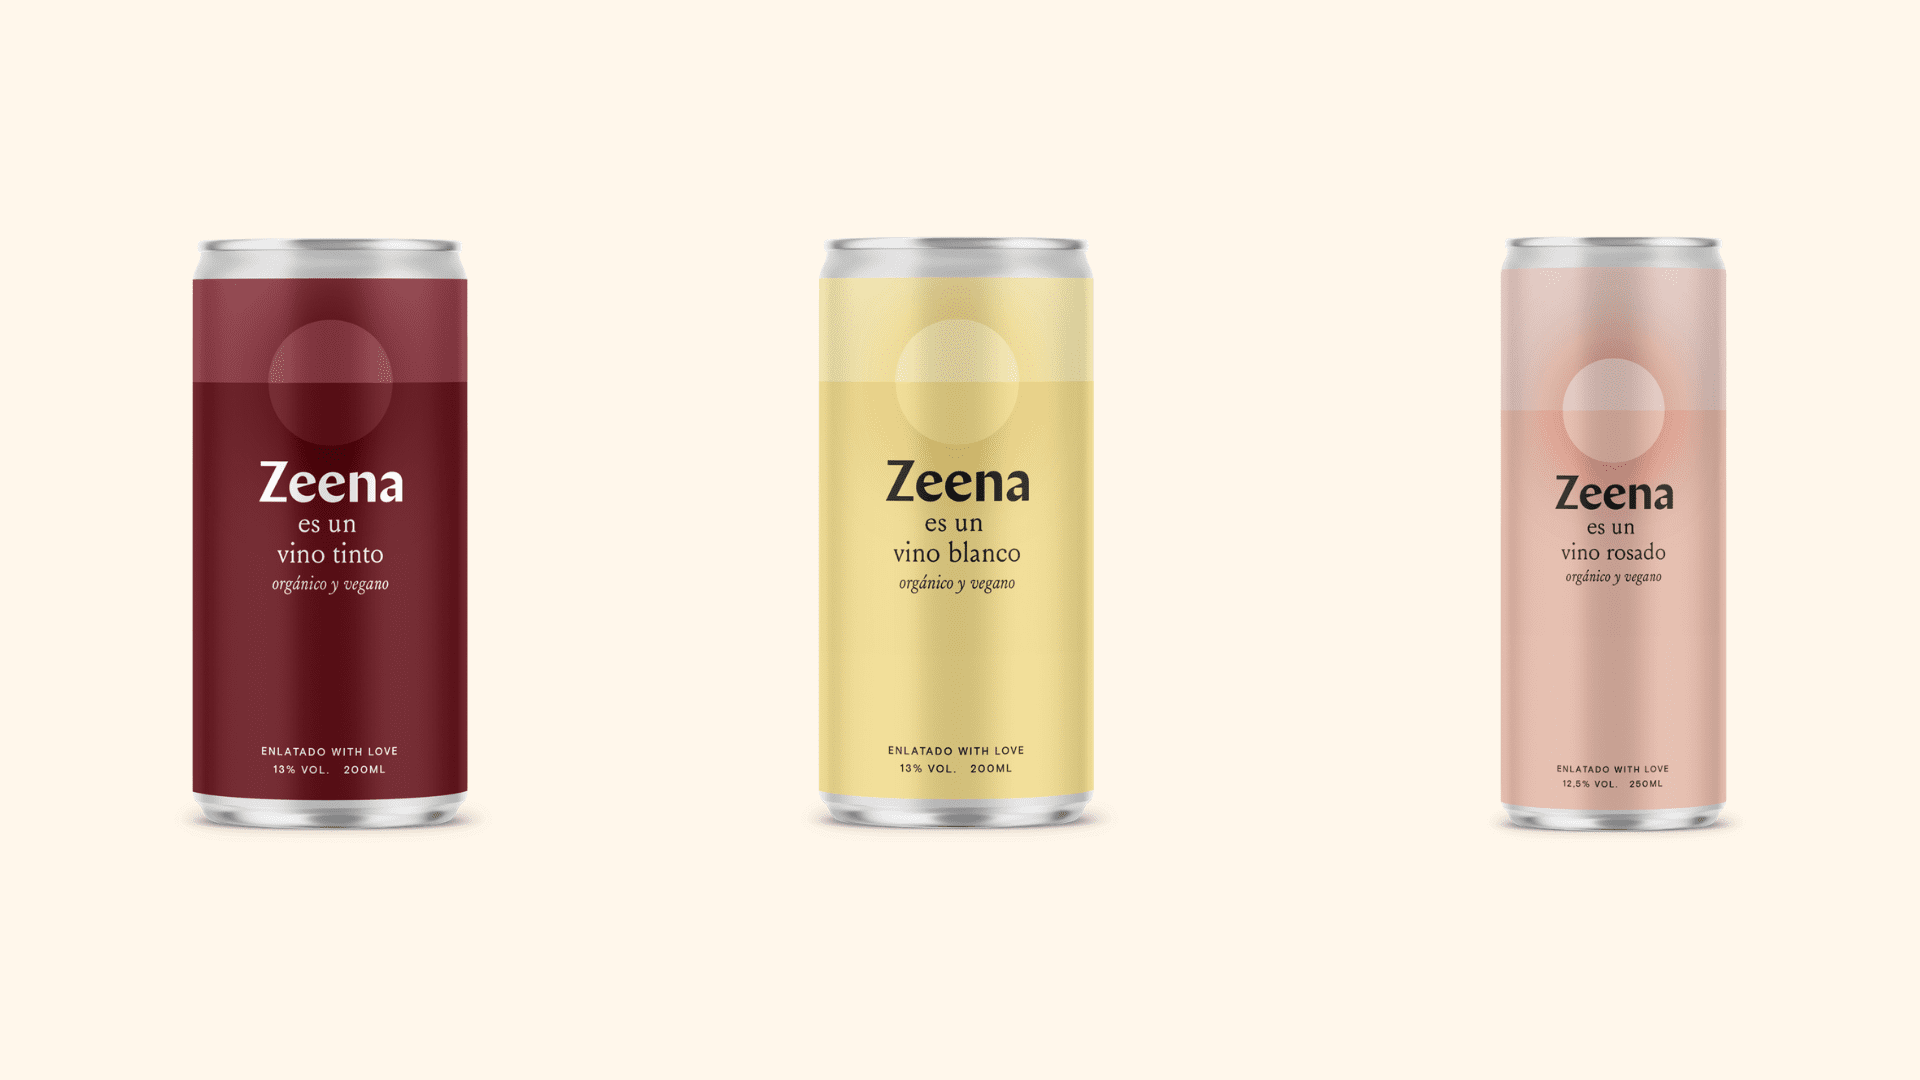 Zeena canned wine